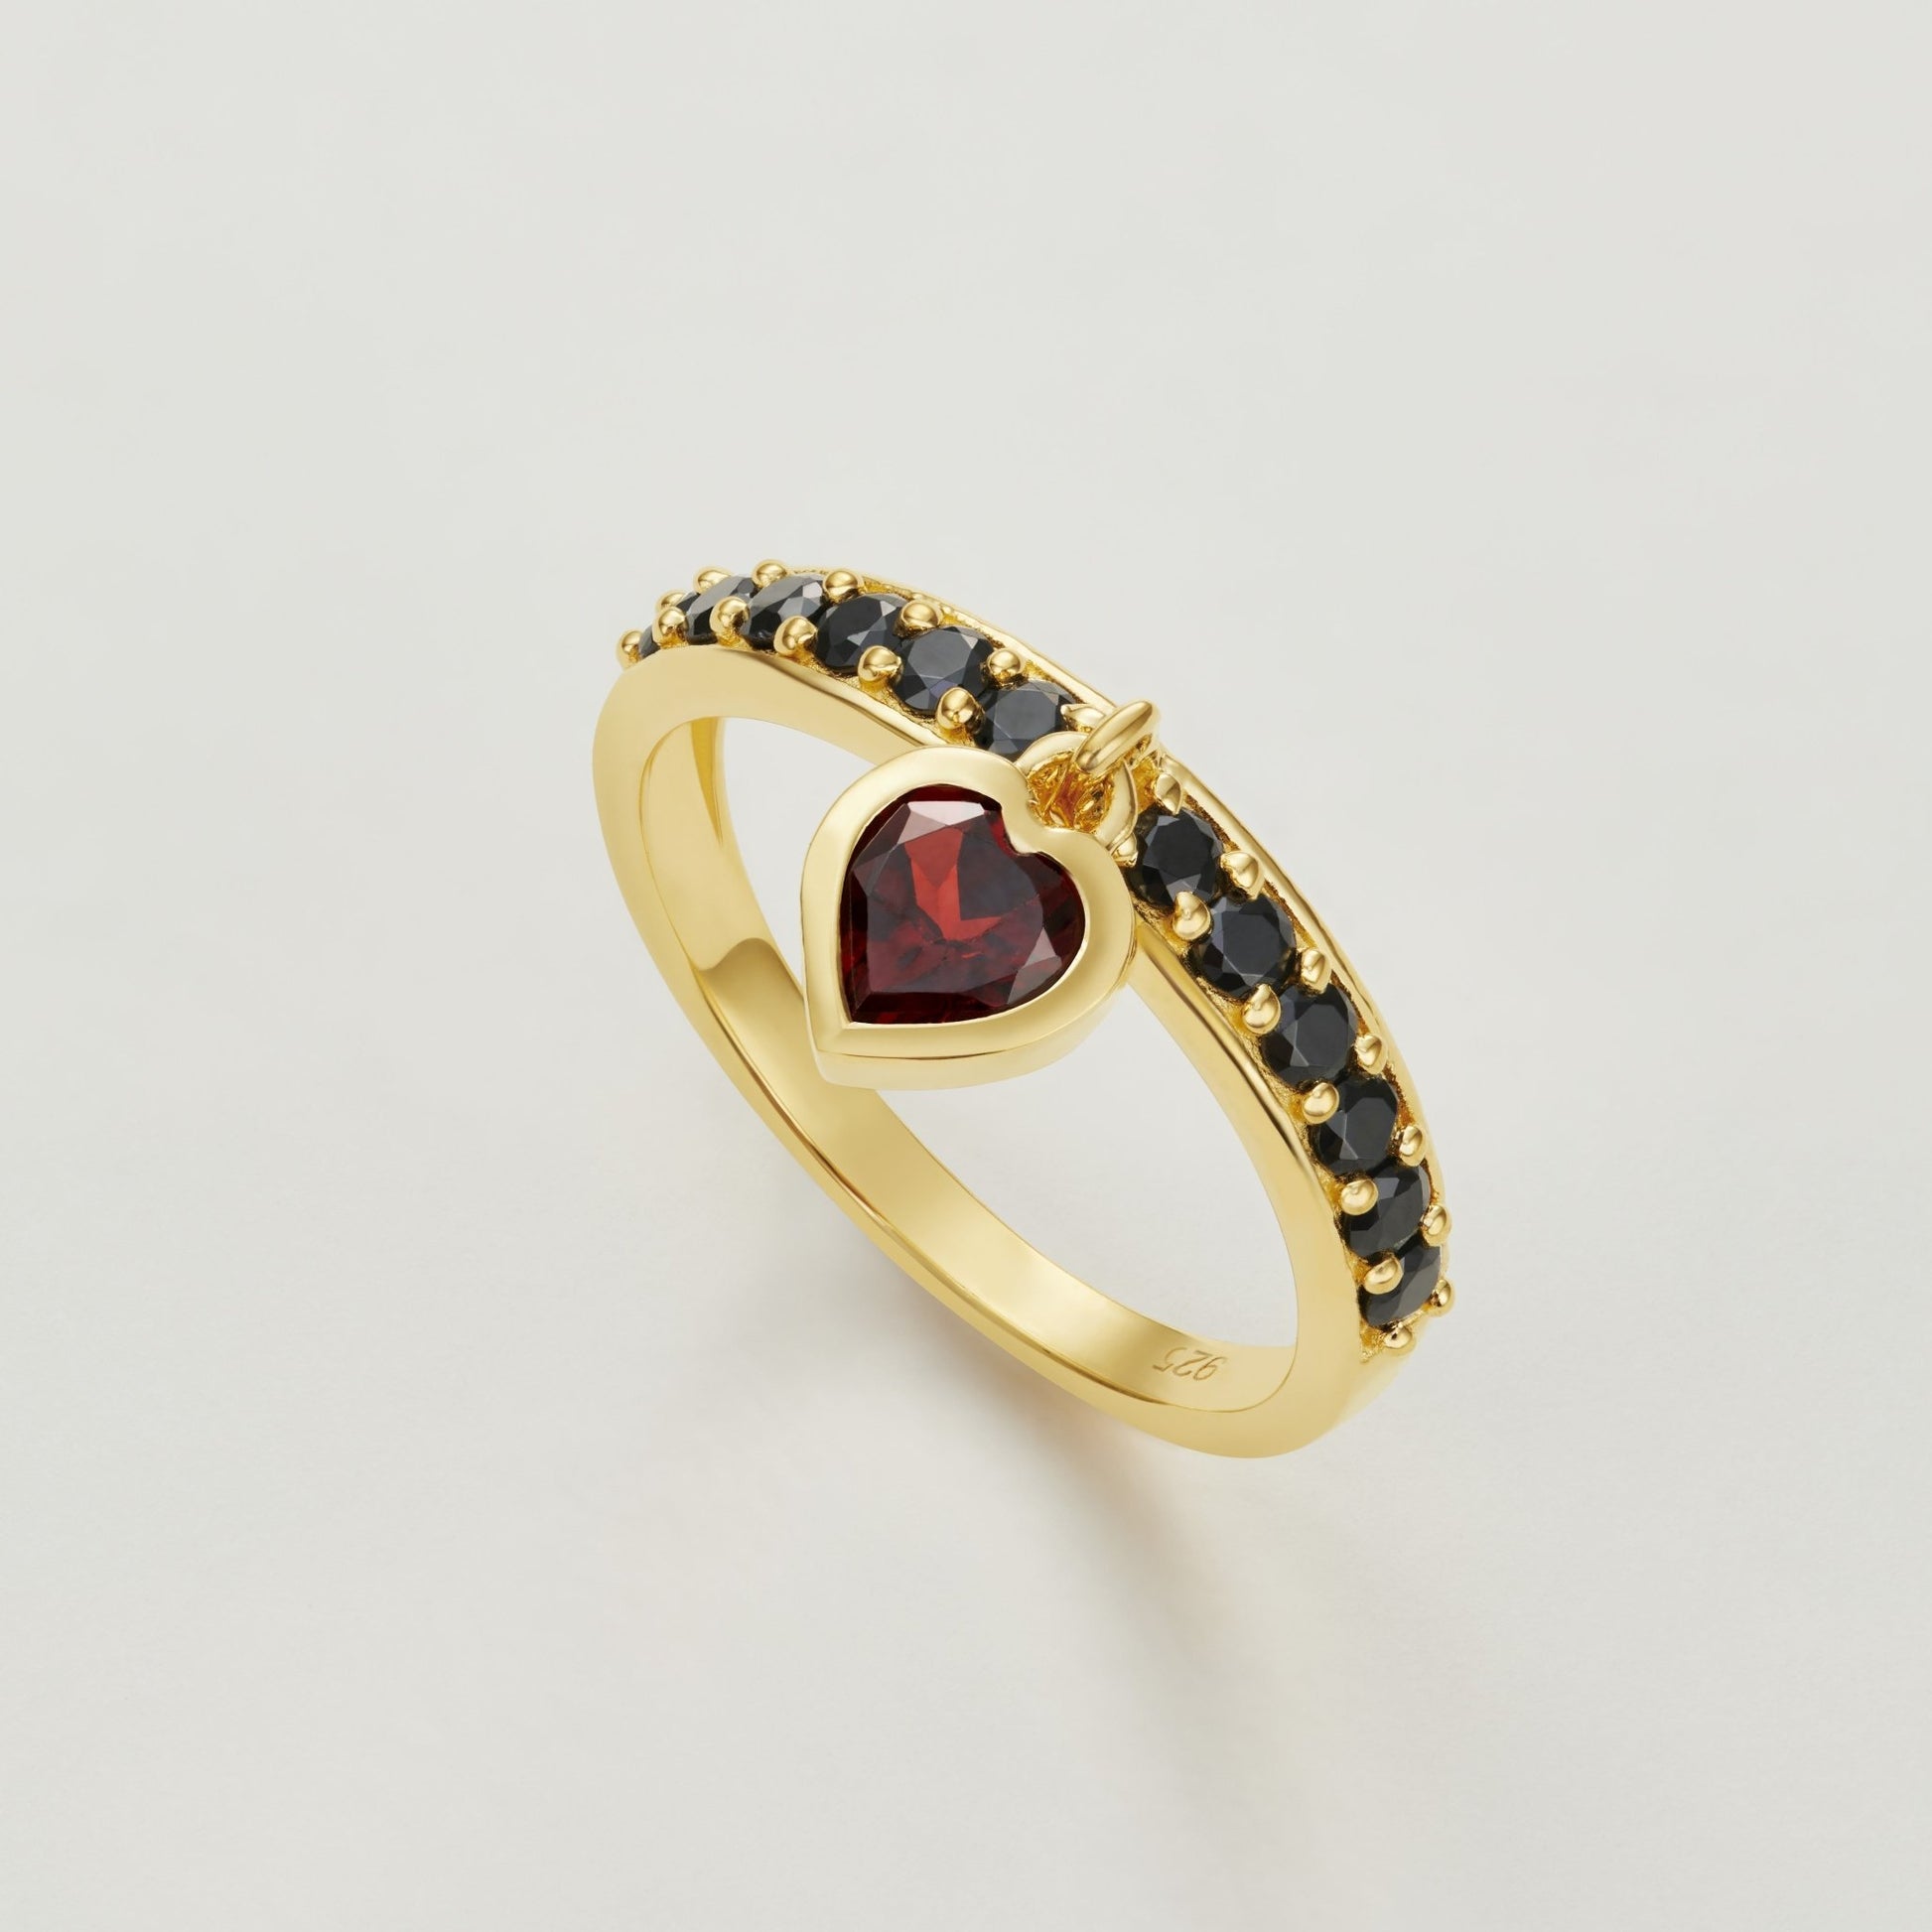 QUEEN OF HEARTS GARNET & BLACK ONYX CHARM RING - Fool's Gold Jewellery